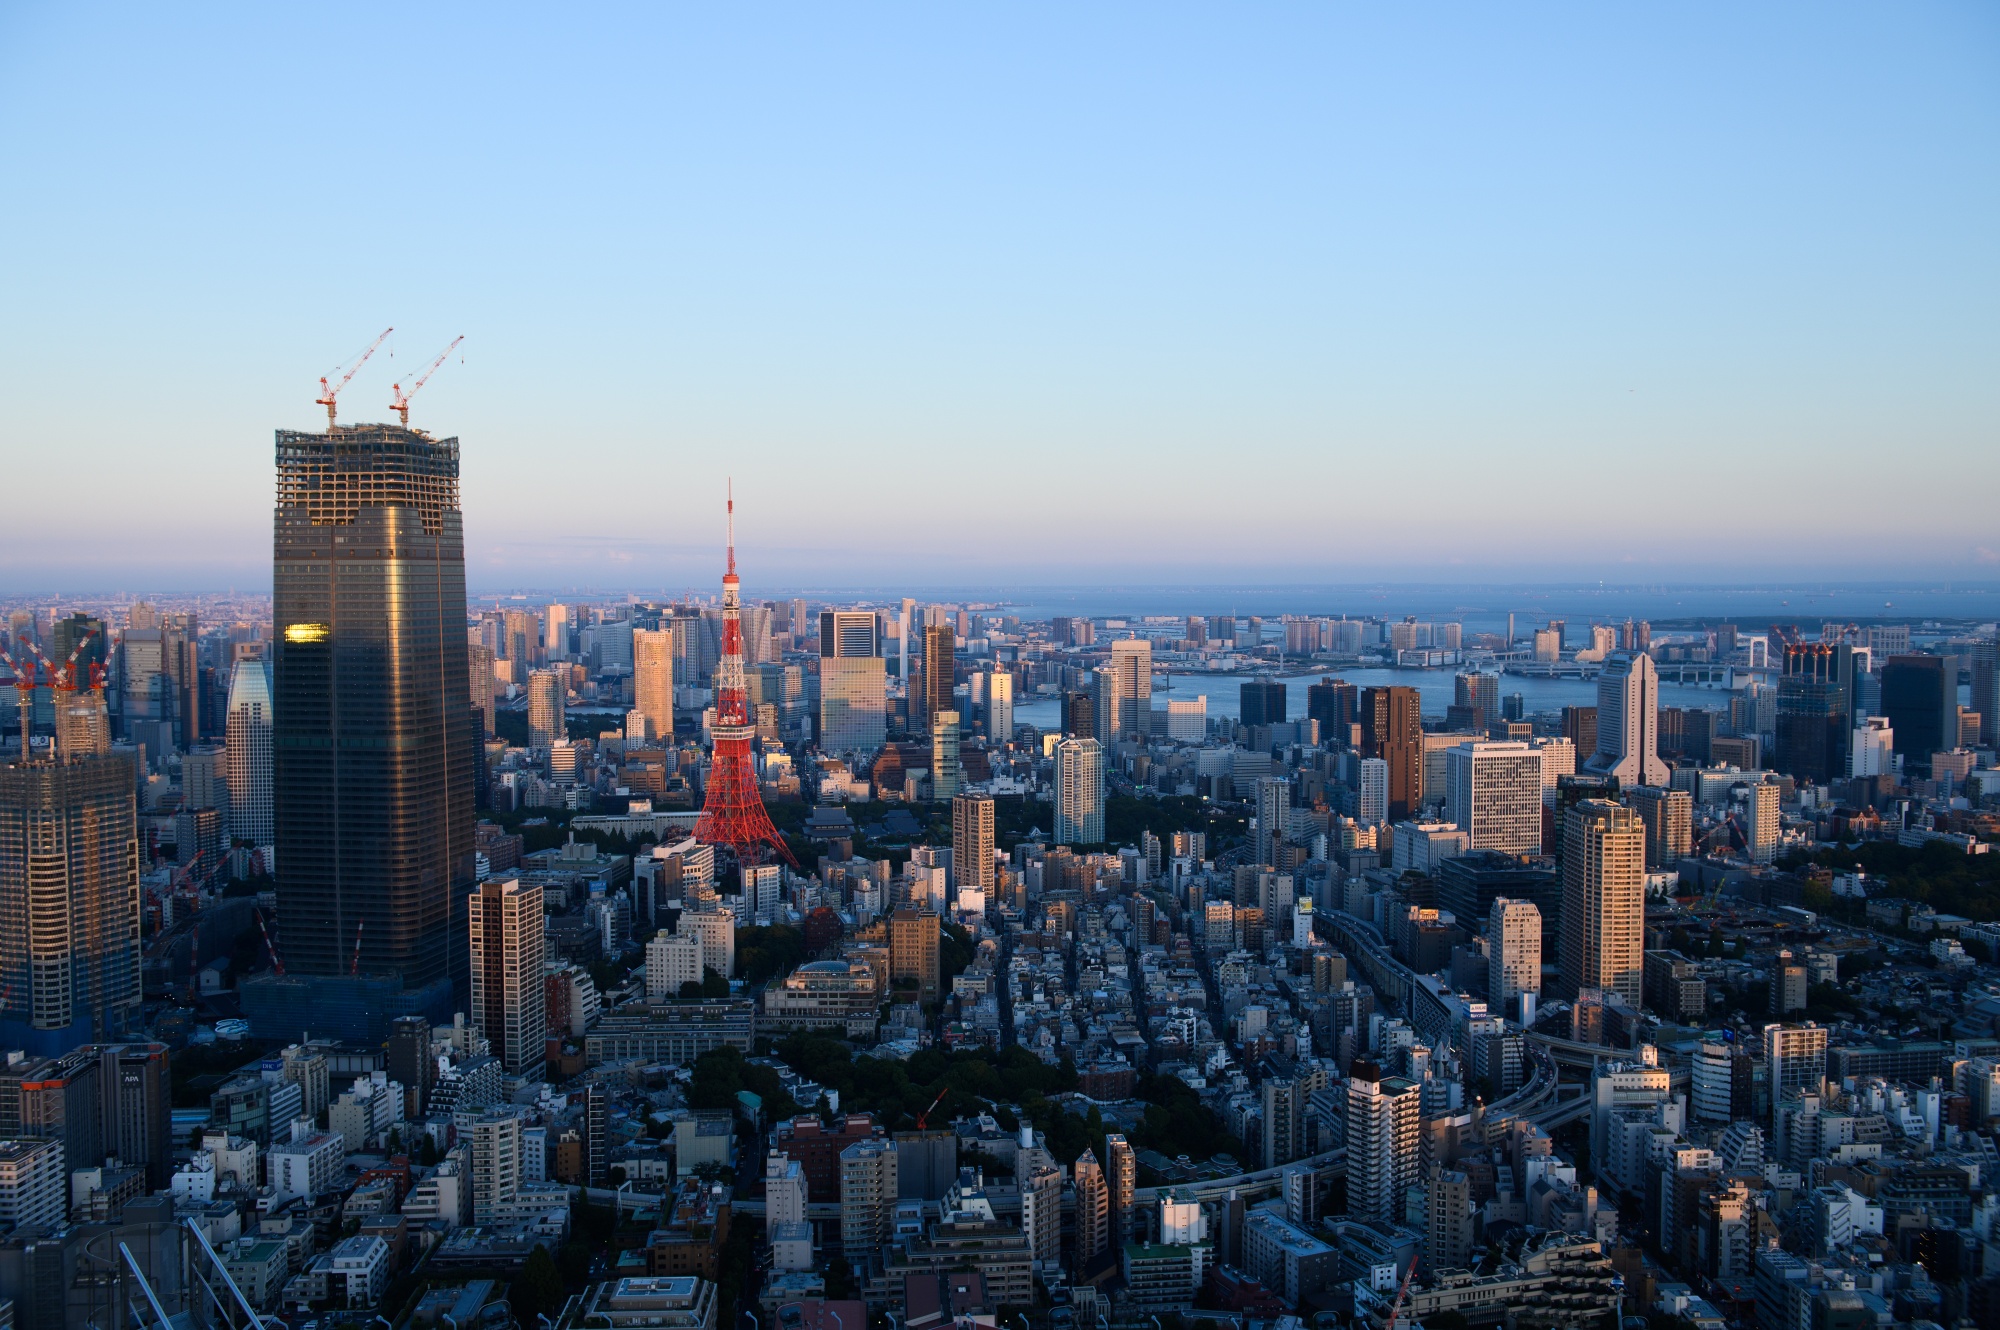 8604:Tokyo 株価 - 野村ホールディングス - Bloomberg Markets